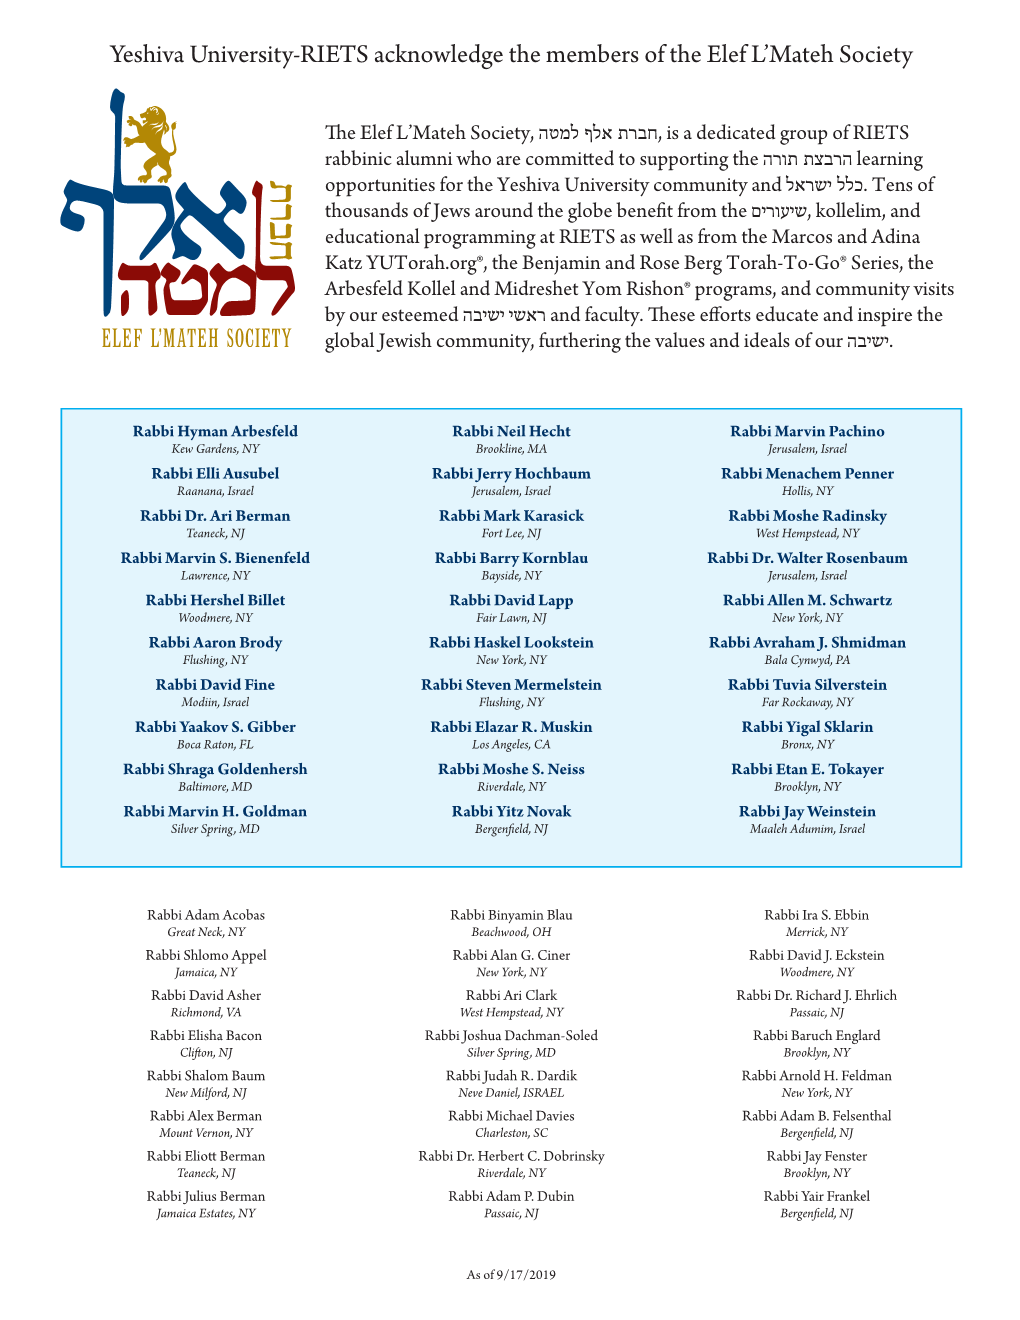 Yeshiva University-RIETS Acknowledge the Members of the Elef L’Mateh Society